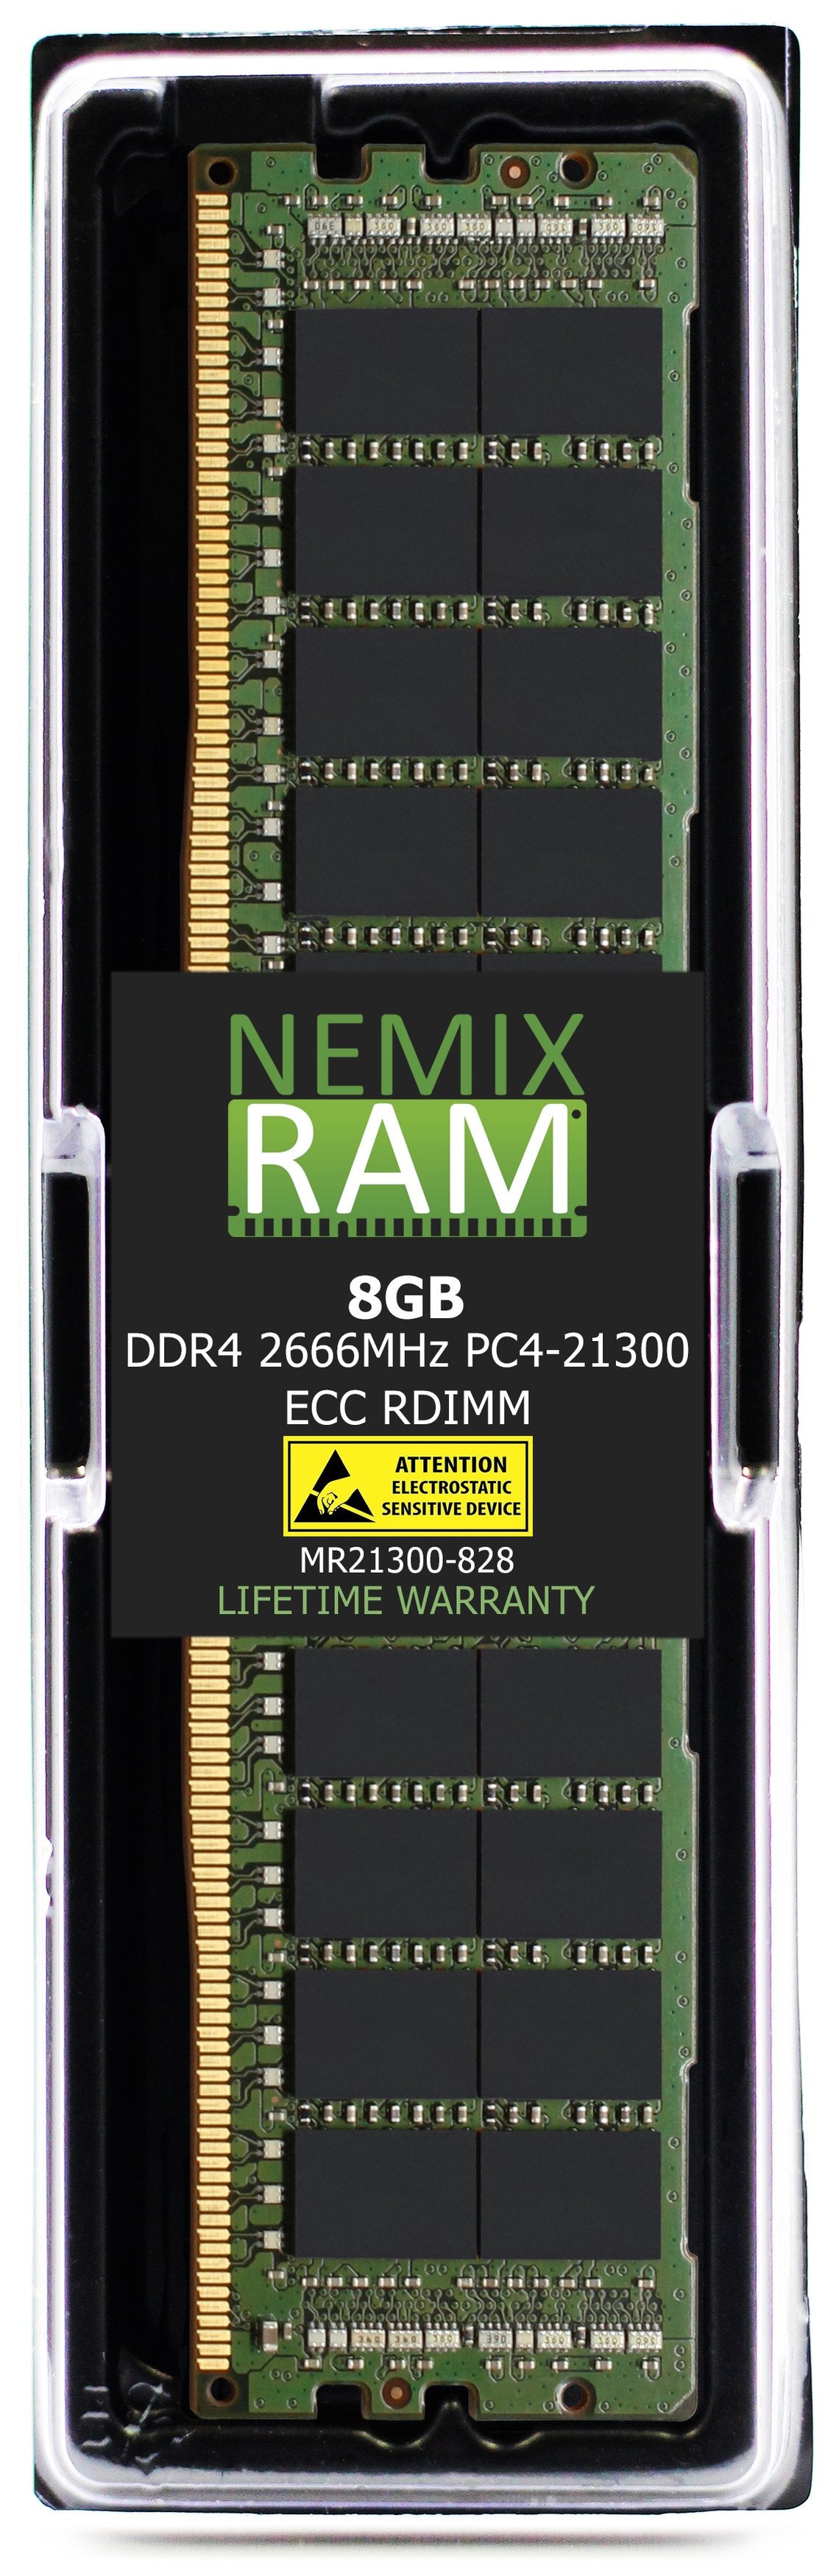 NEC Express5800 R120h Memory Module N8102-714 8GB DDR4 2666MHZ PC4-21300 RDIMM